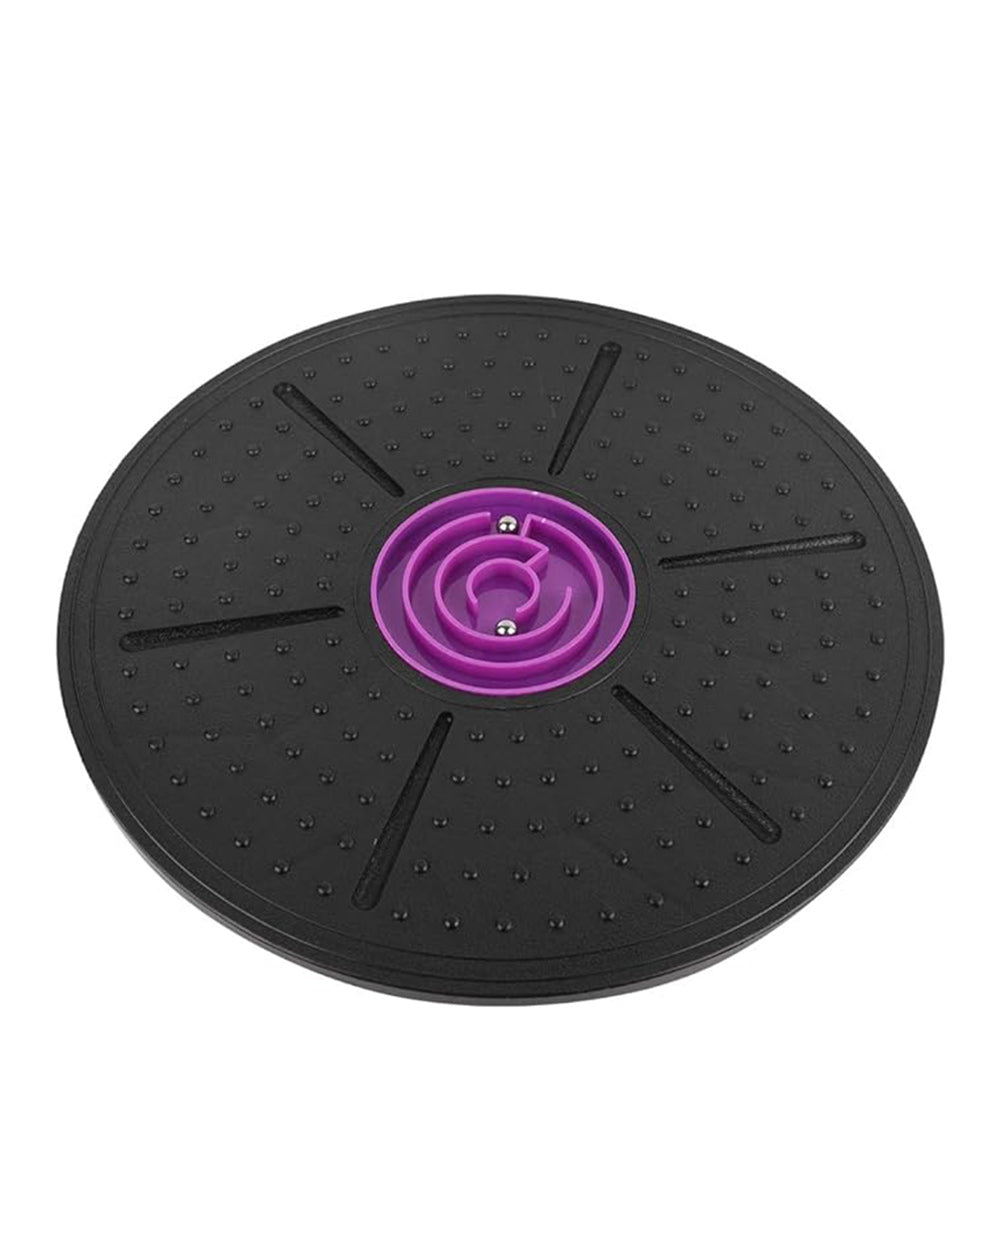 Mootea Yoga Balance Board  with Labyrinth Purple